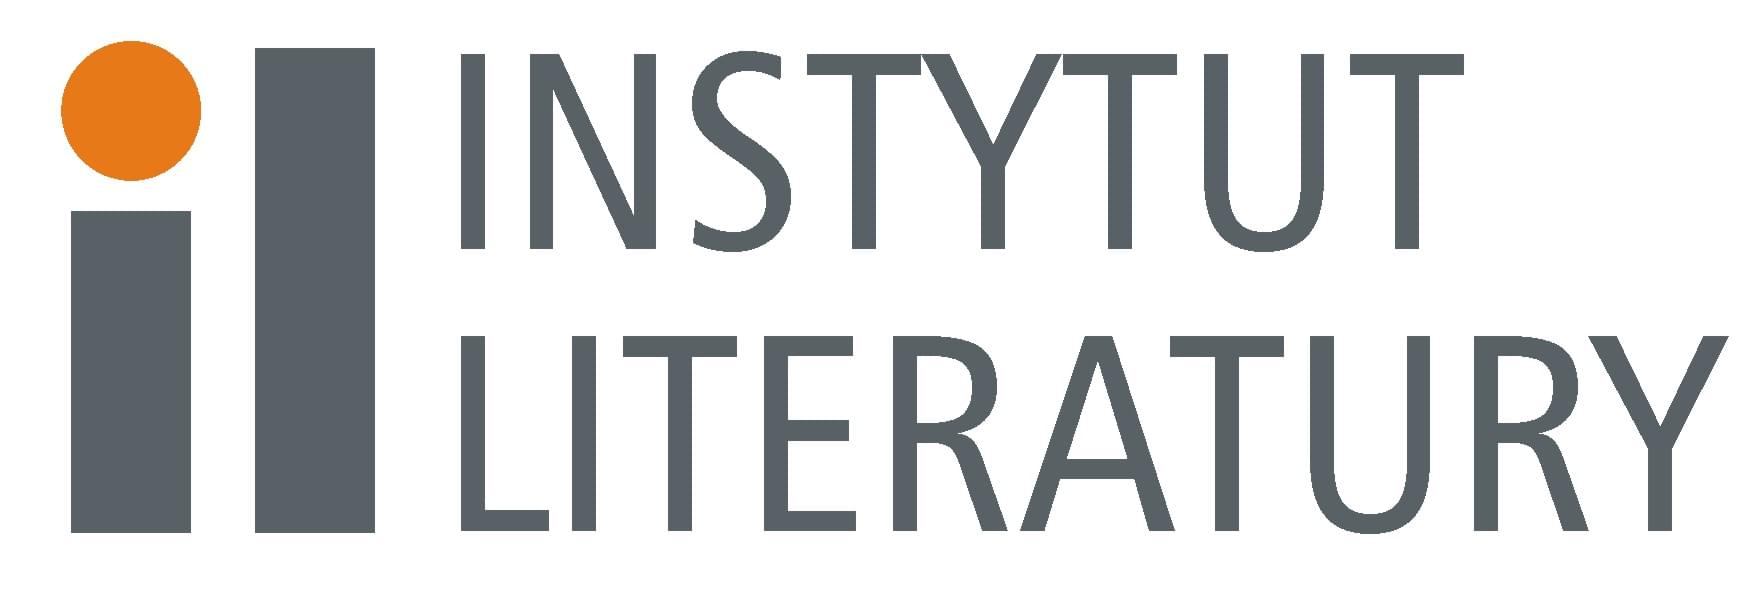 Logo Instytutu literatury